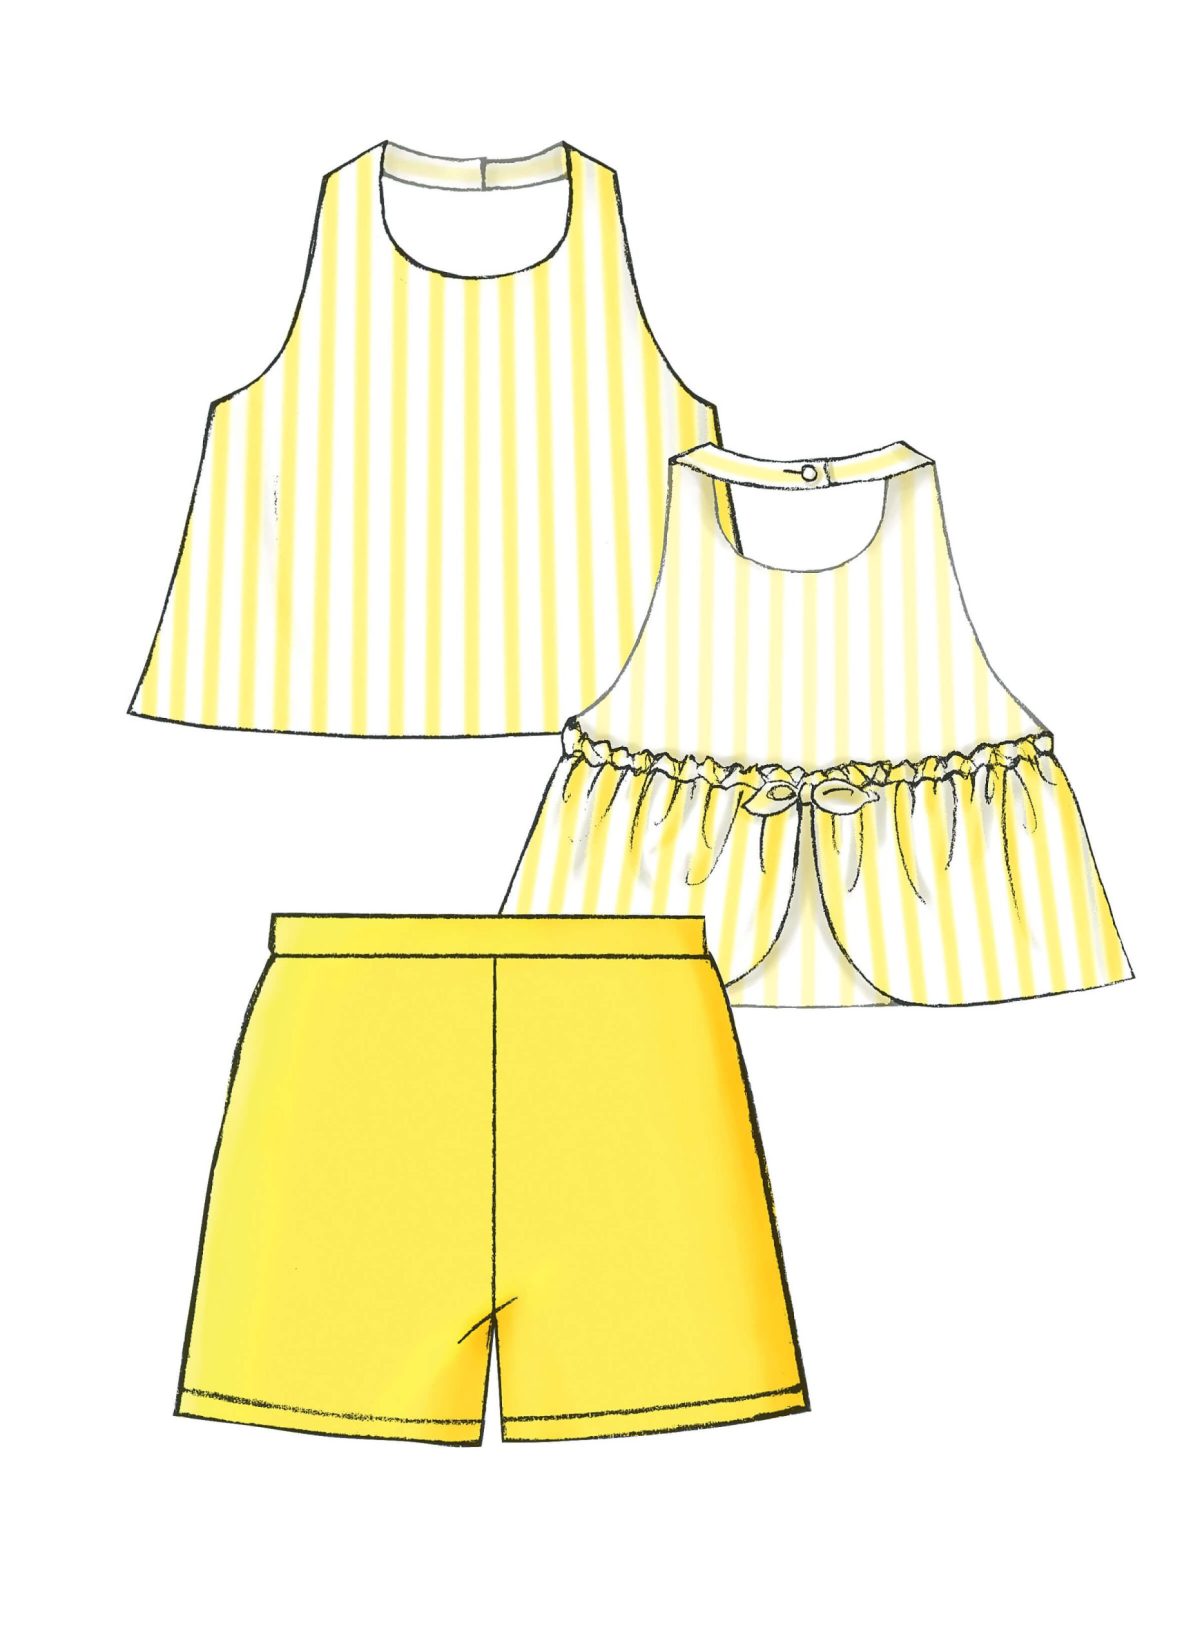 Butterick Sewing Pattern B4503 Children's/Girls' Top, Skort and Shorts